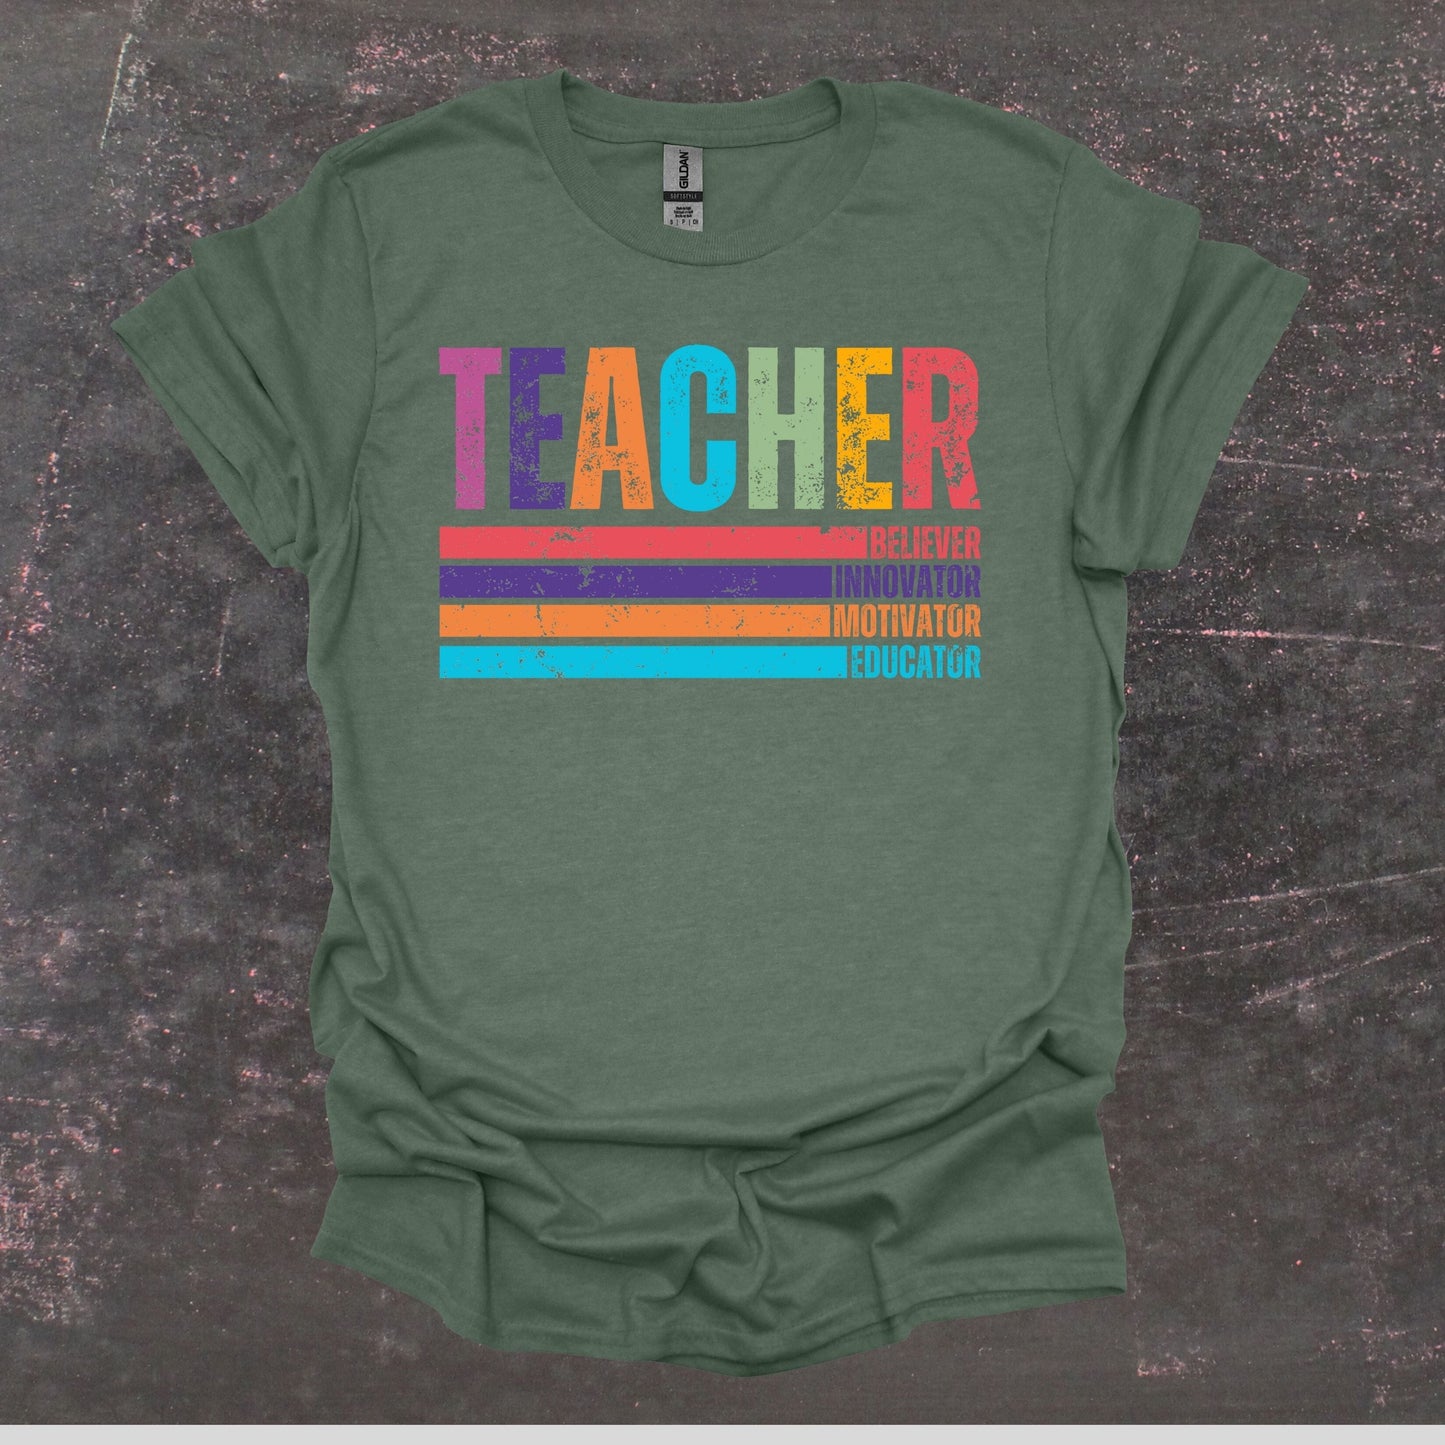 Teacher Believer Innovator Motivator Educator - Teacher T Shirt - Adult Tee Shirts T-Shirts Graphic Avenue Heather Forest Green Adult Small 